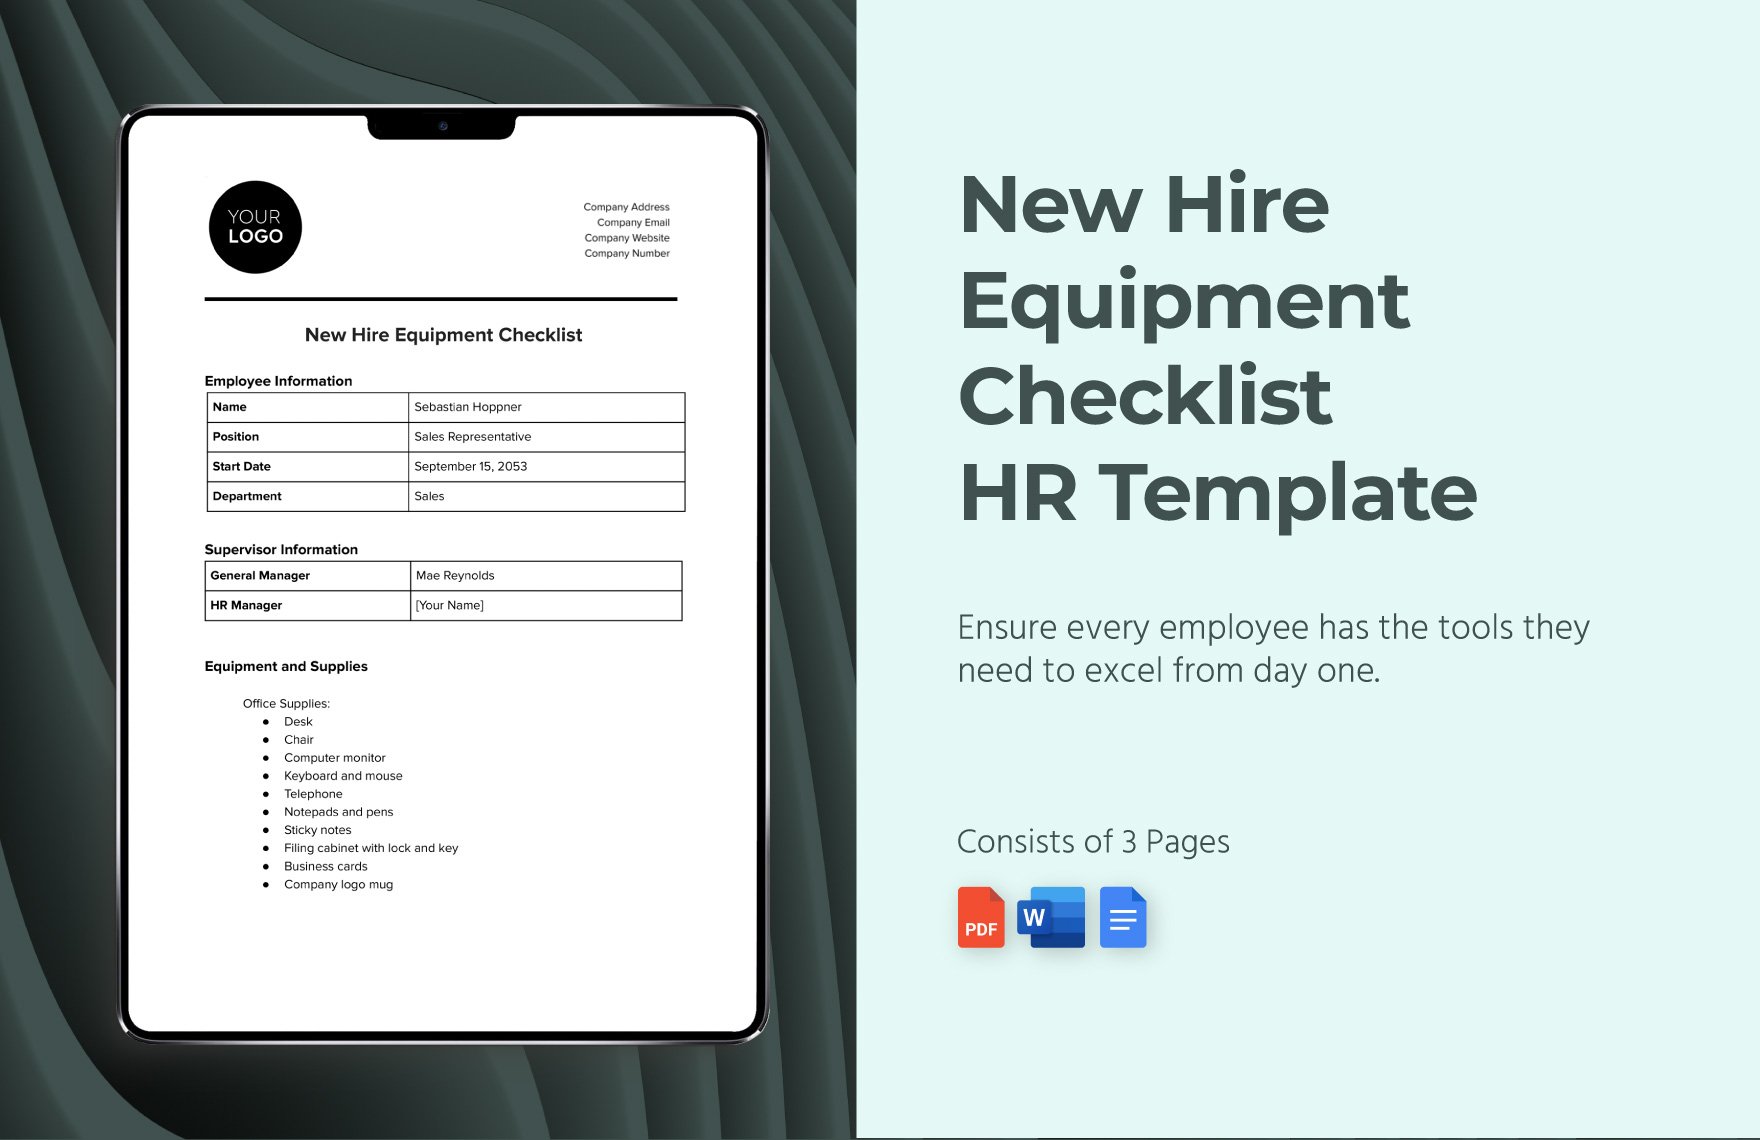 New Hire Equipment Checklist HR Template